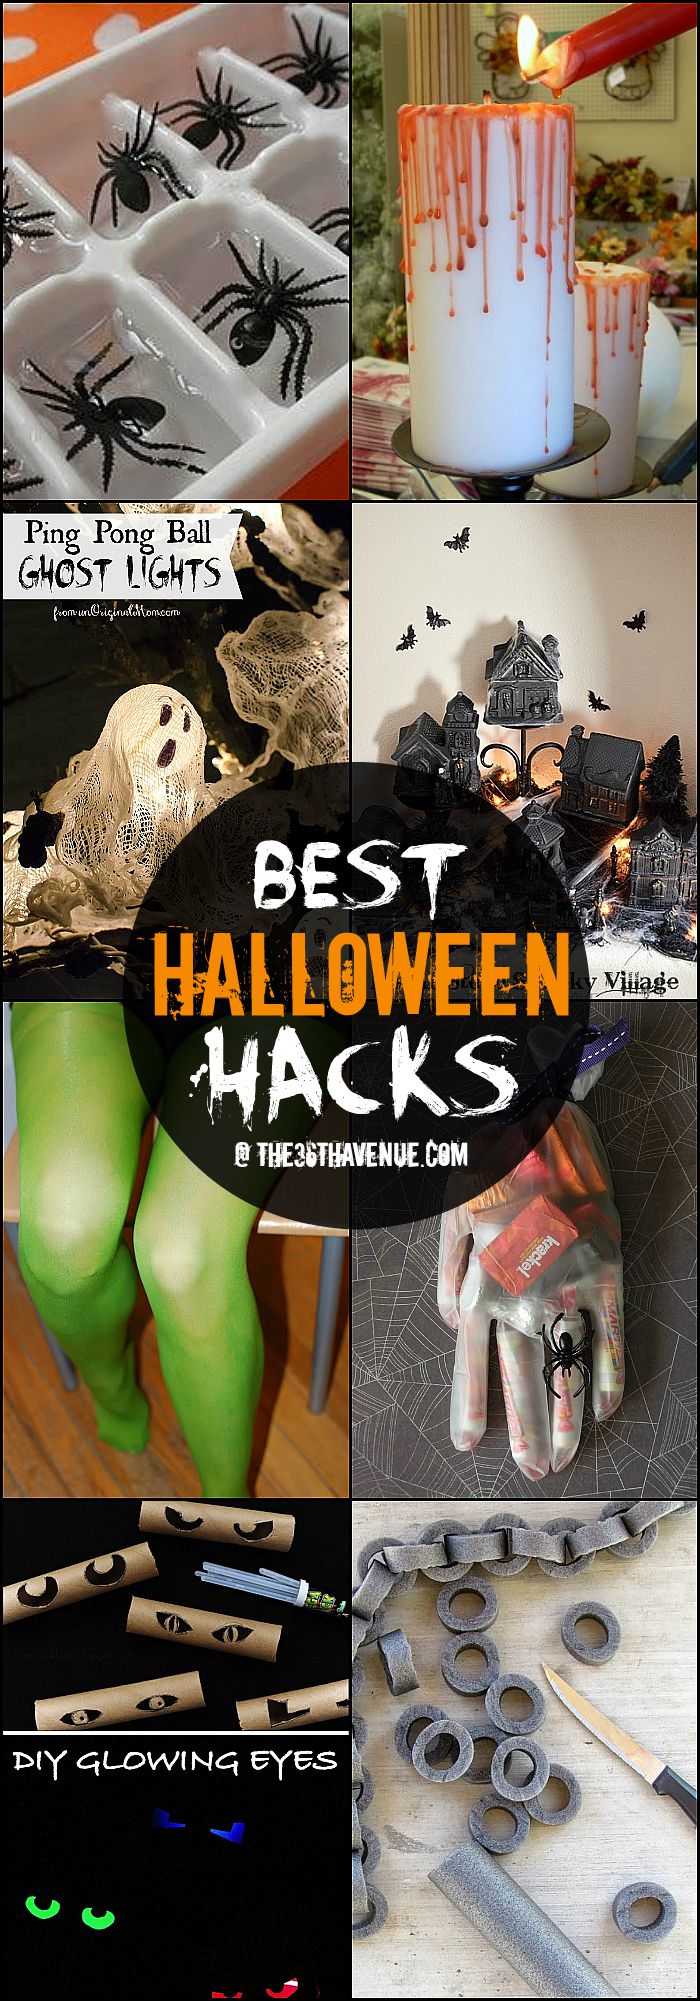 Halloween Hacks at the36thavenue.com 